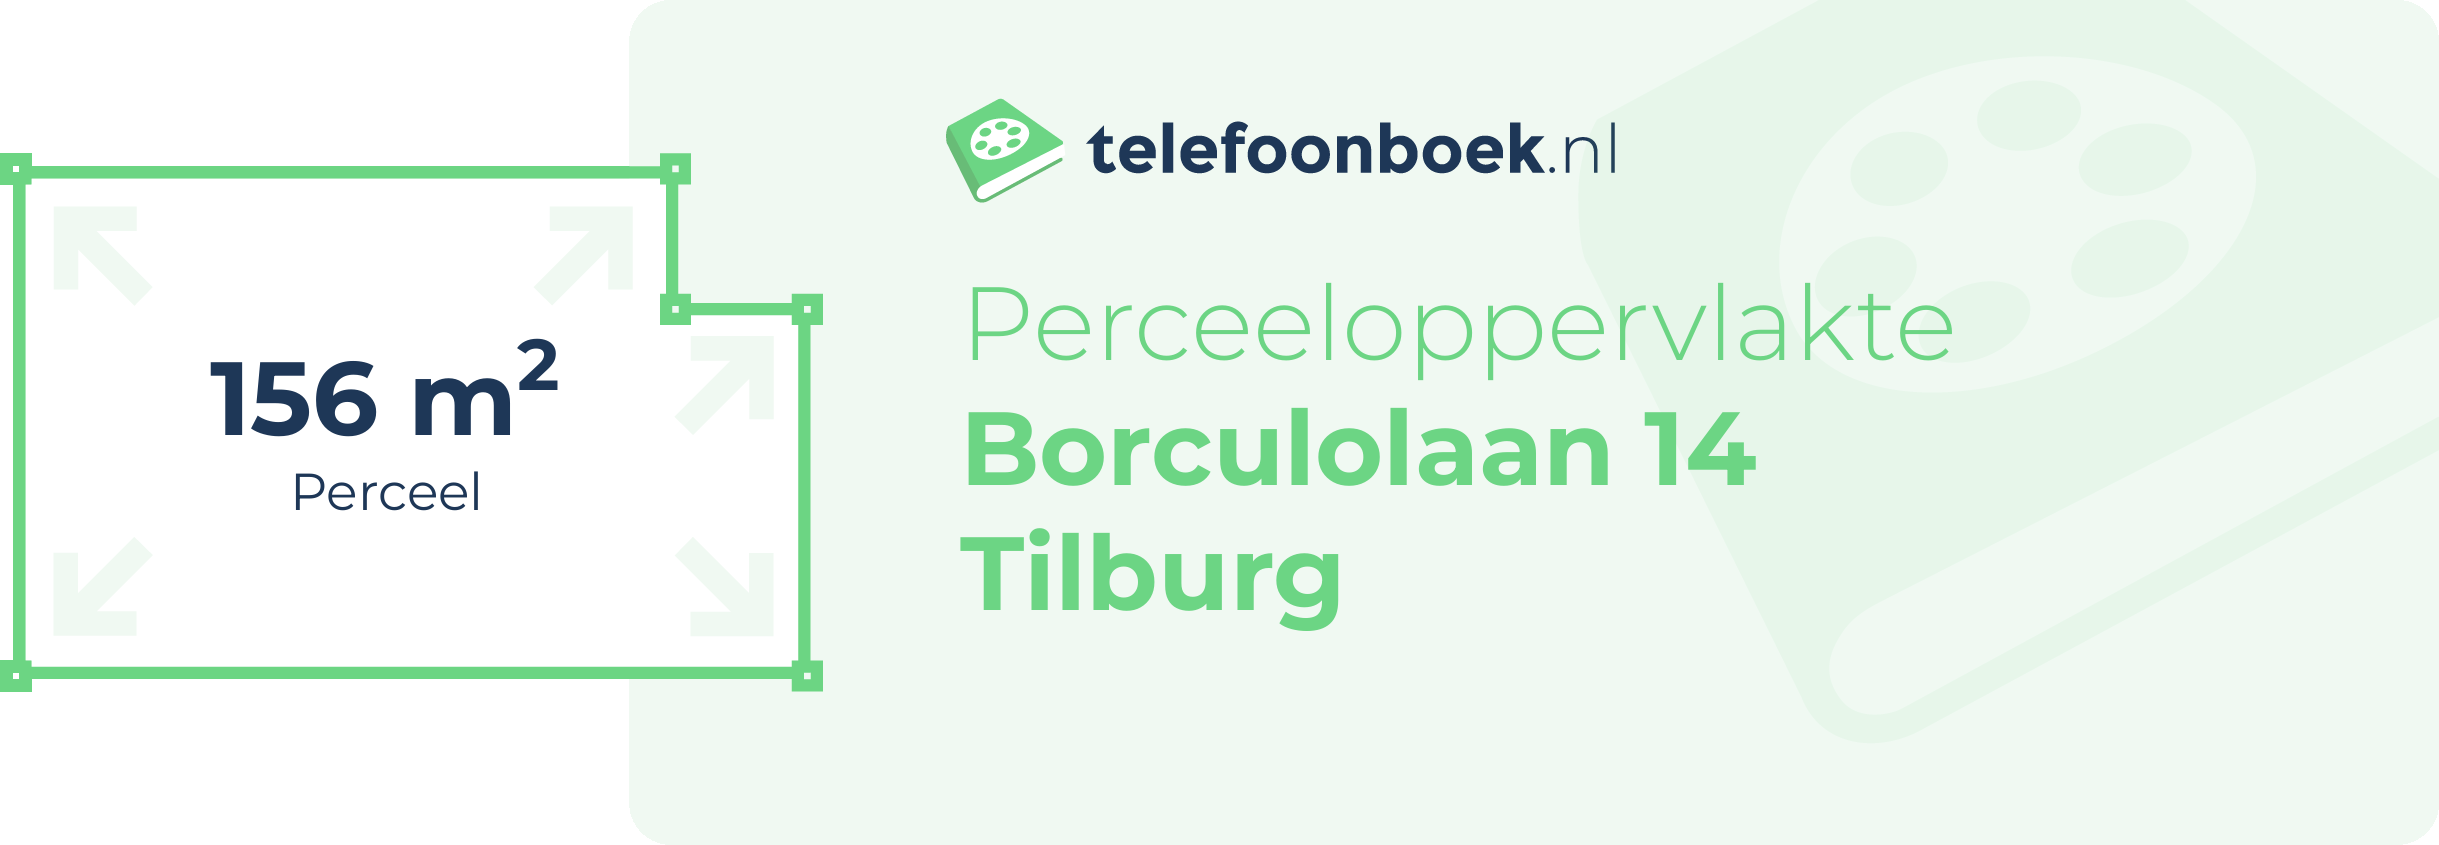 Perceeloppervlakte Borculolaan 14 Tilburg